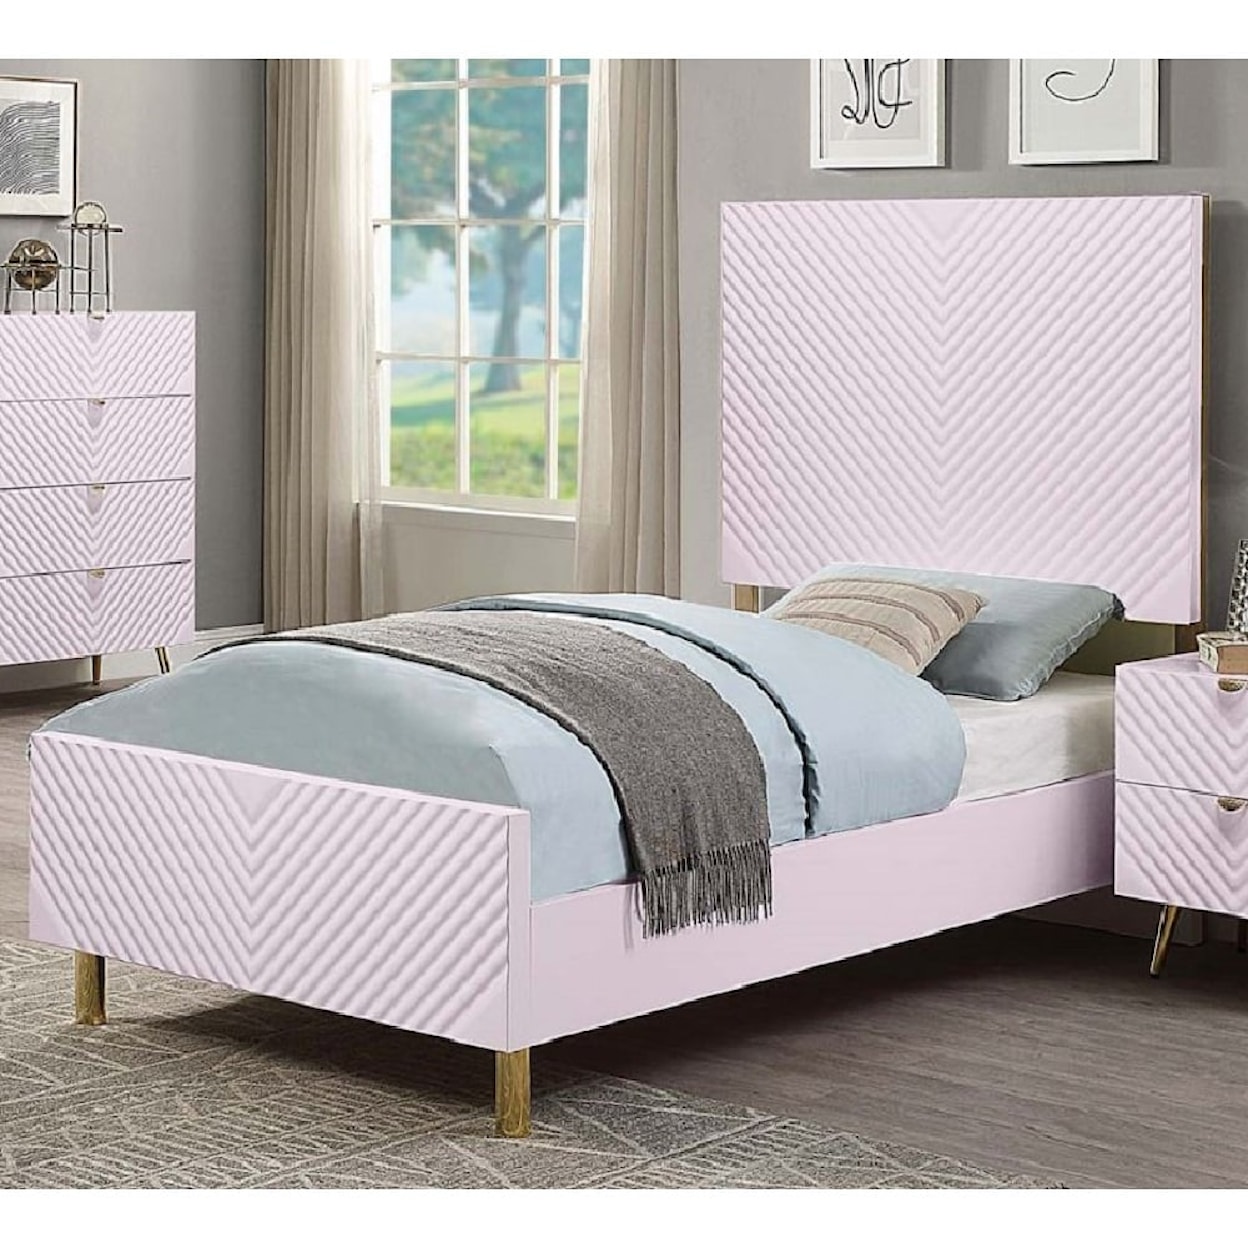 Acme Furniture Gaines Full Bed